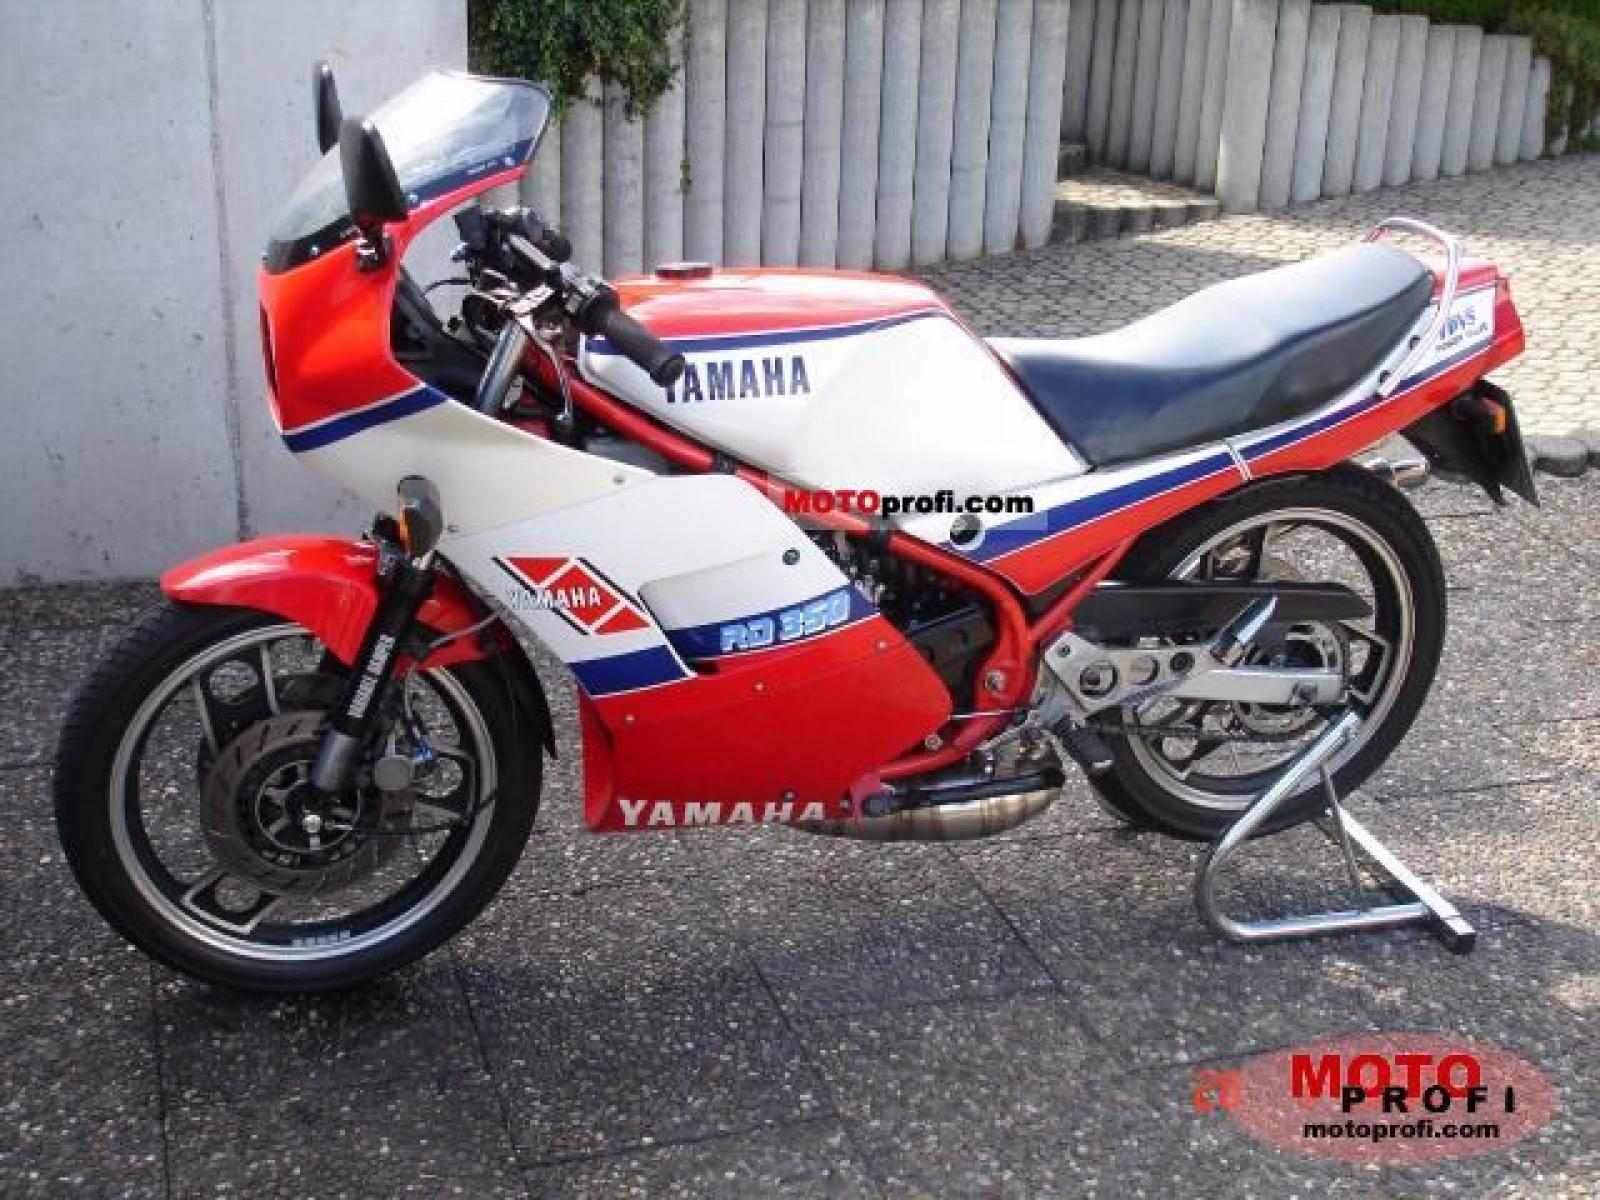 Yamaha RD 350 F (reduced effect) 1986 photo - 2